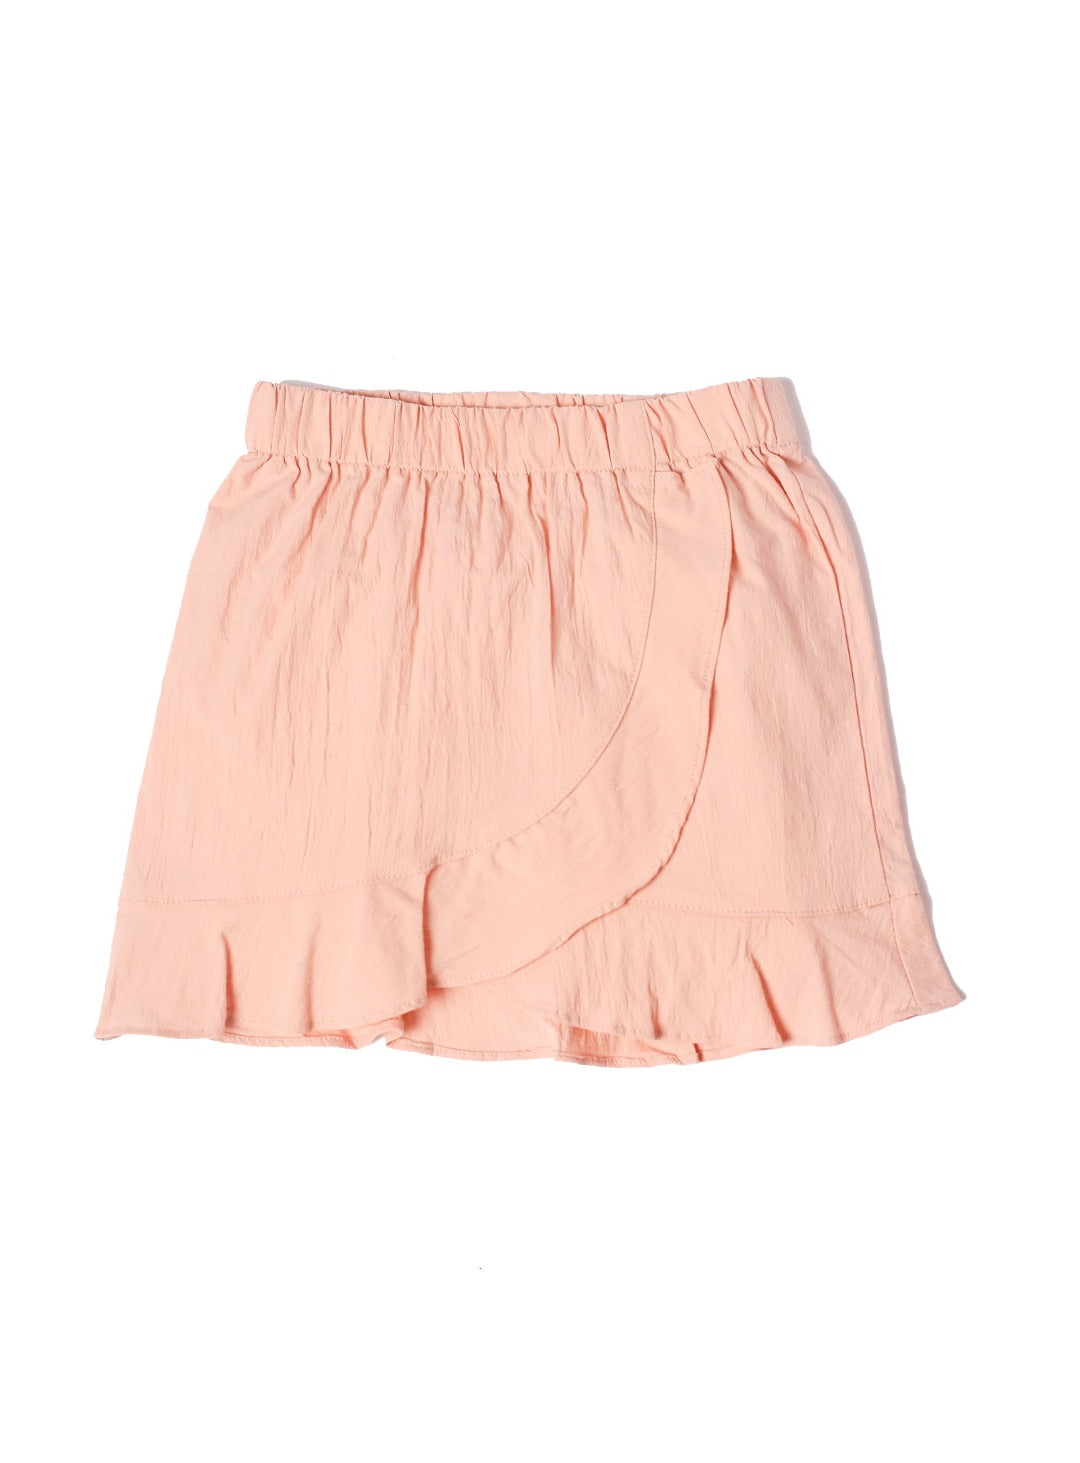 light peach petite skirt with ruffles